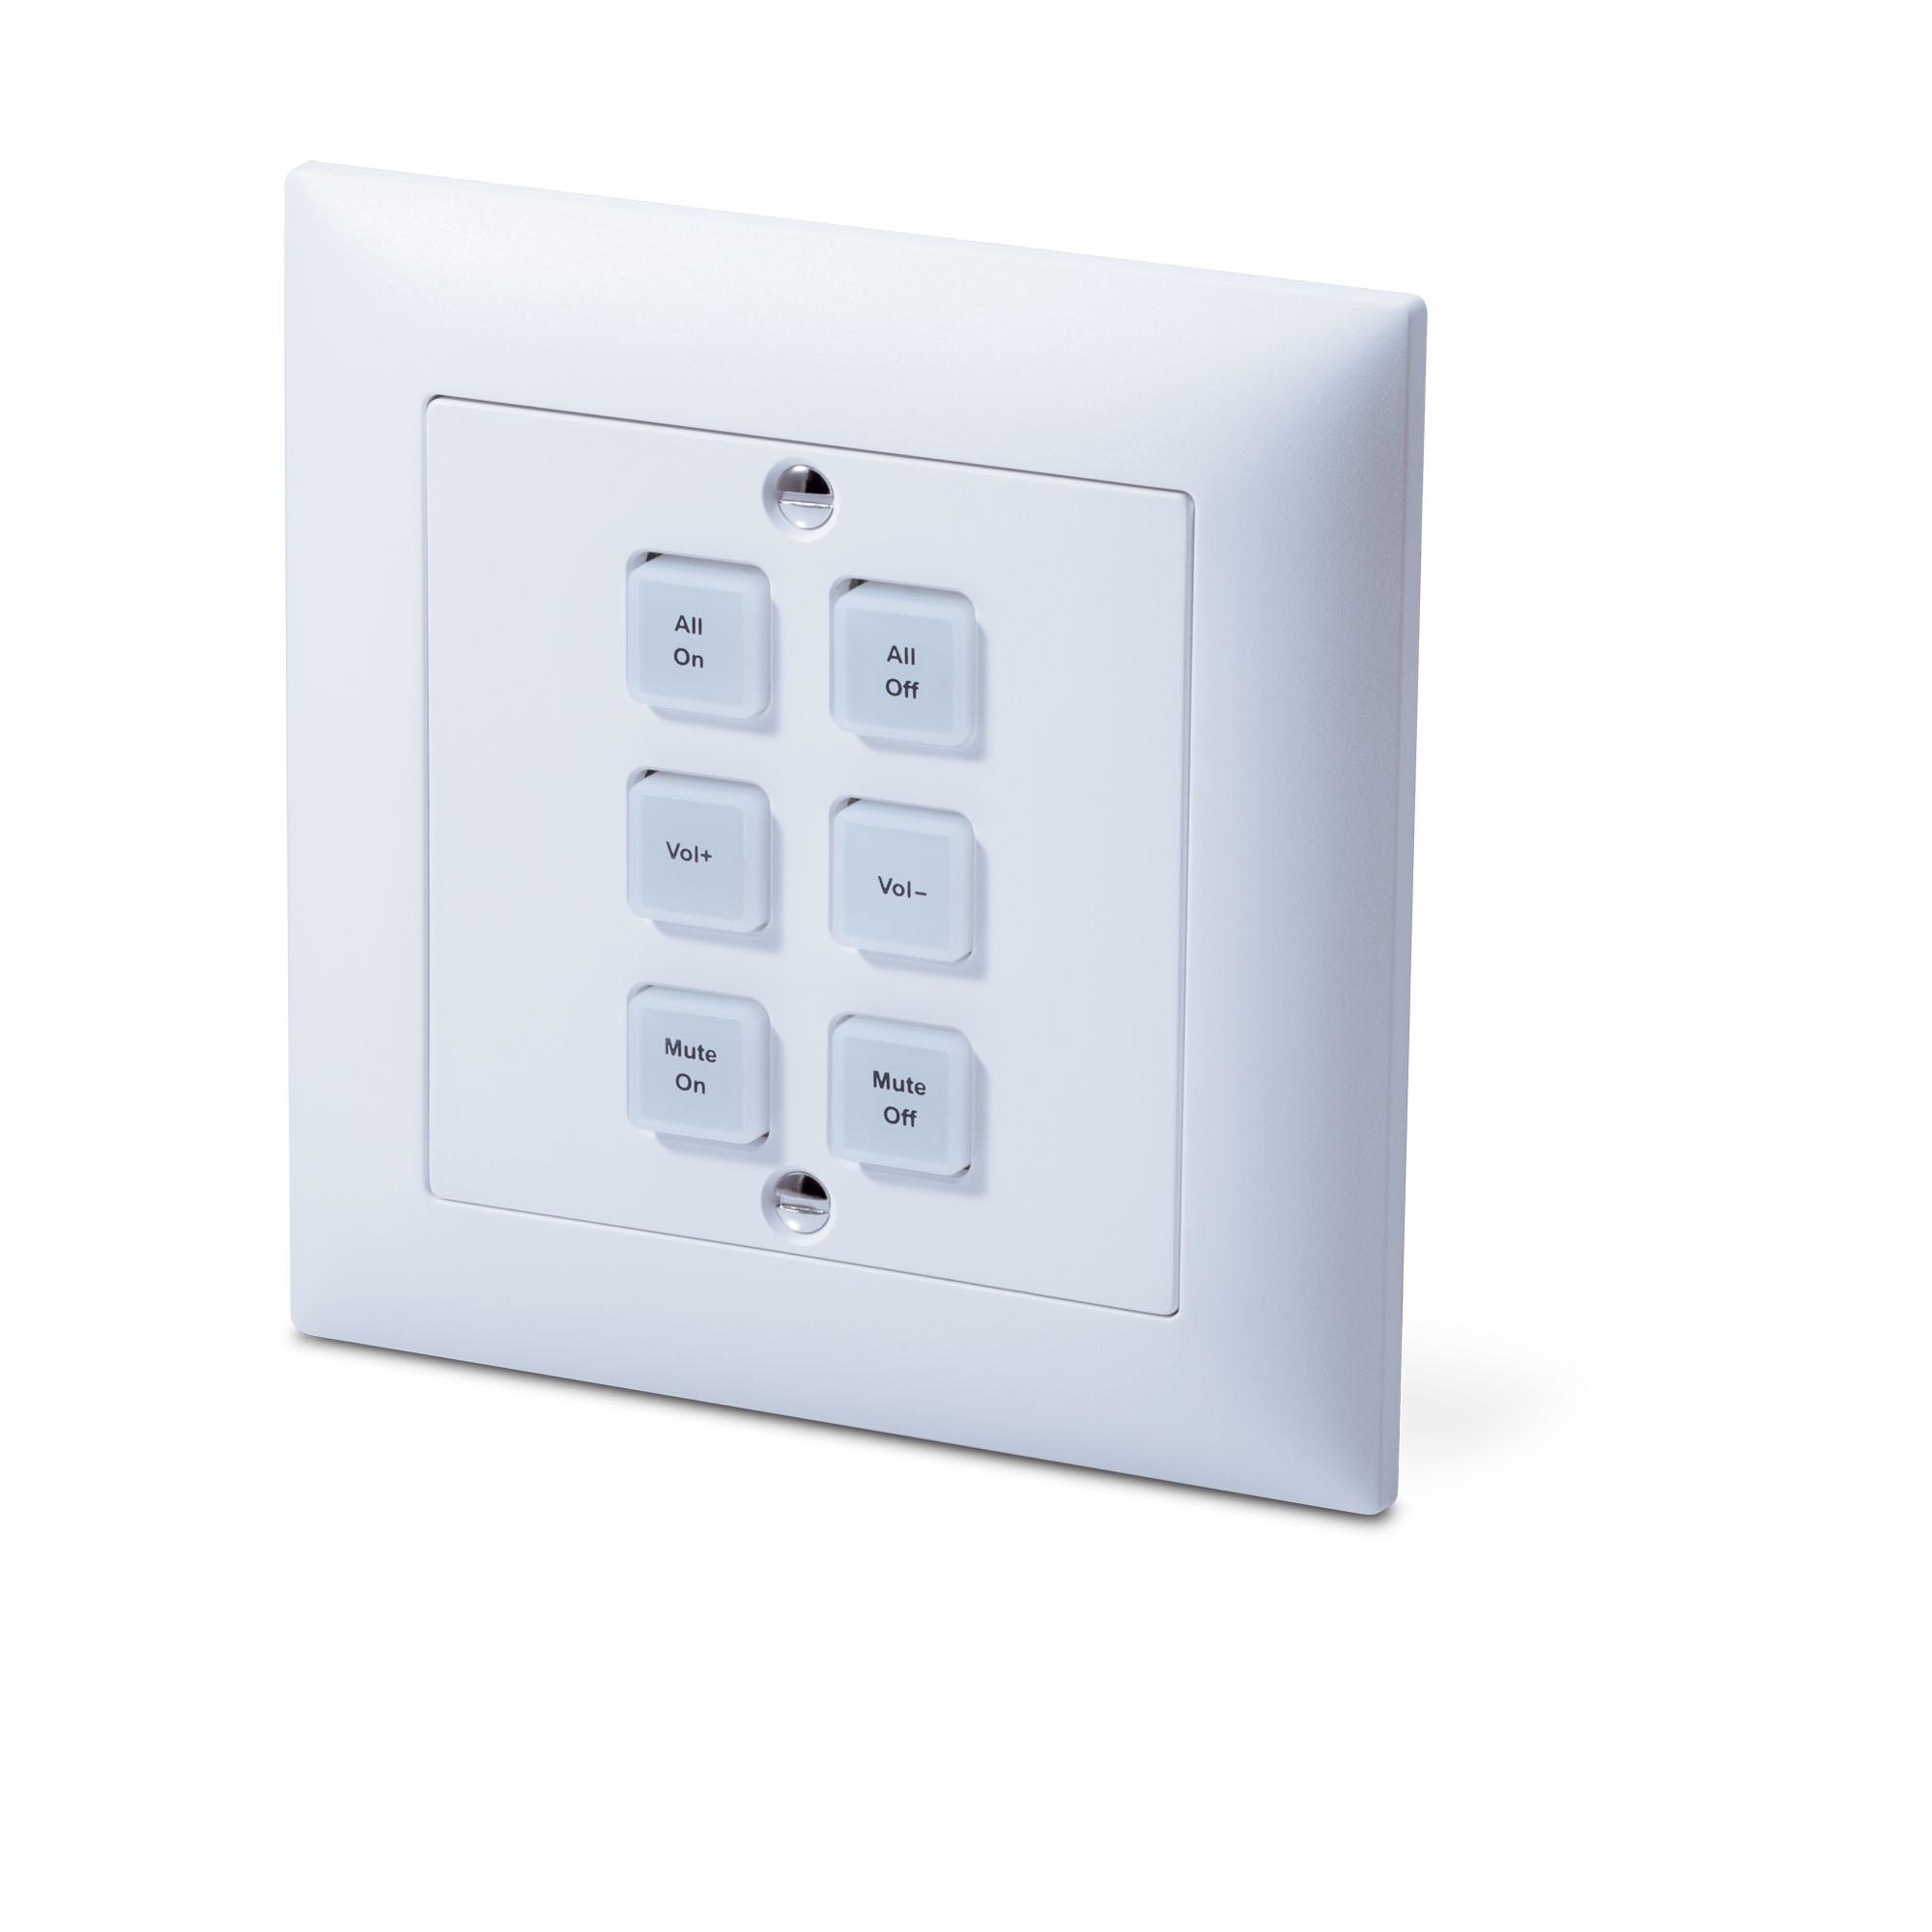 CR-KP3 9 Button Wall-mount Keypad Control System (EURO Single Gang)